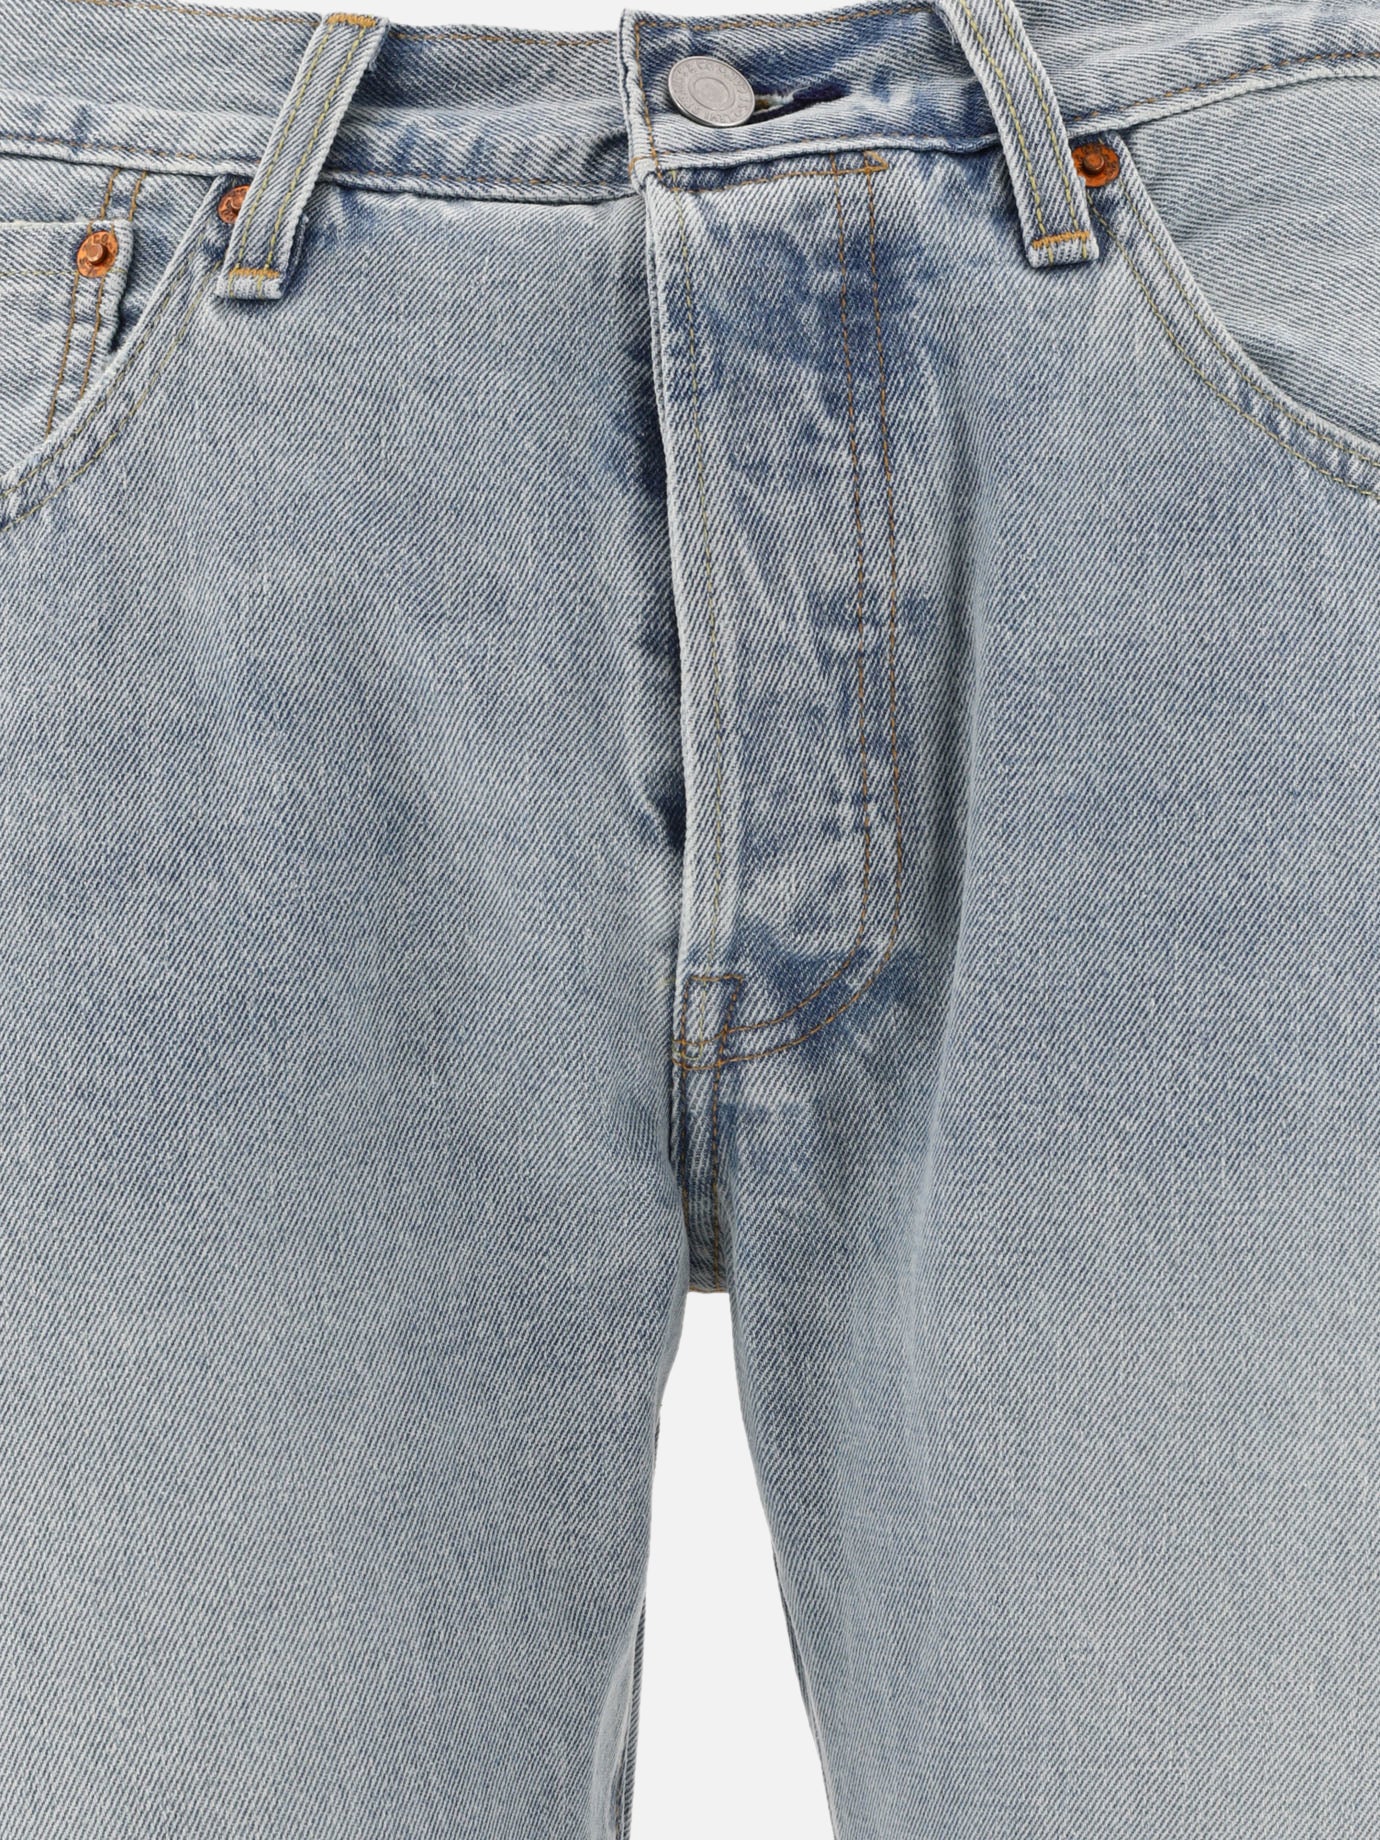 501® original fit selvedge jeans